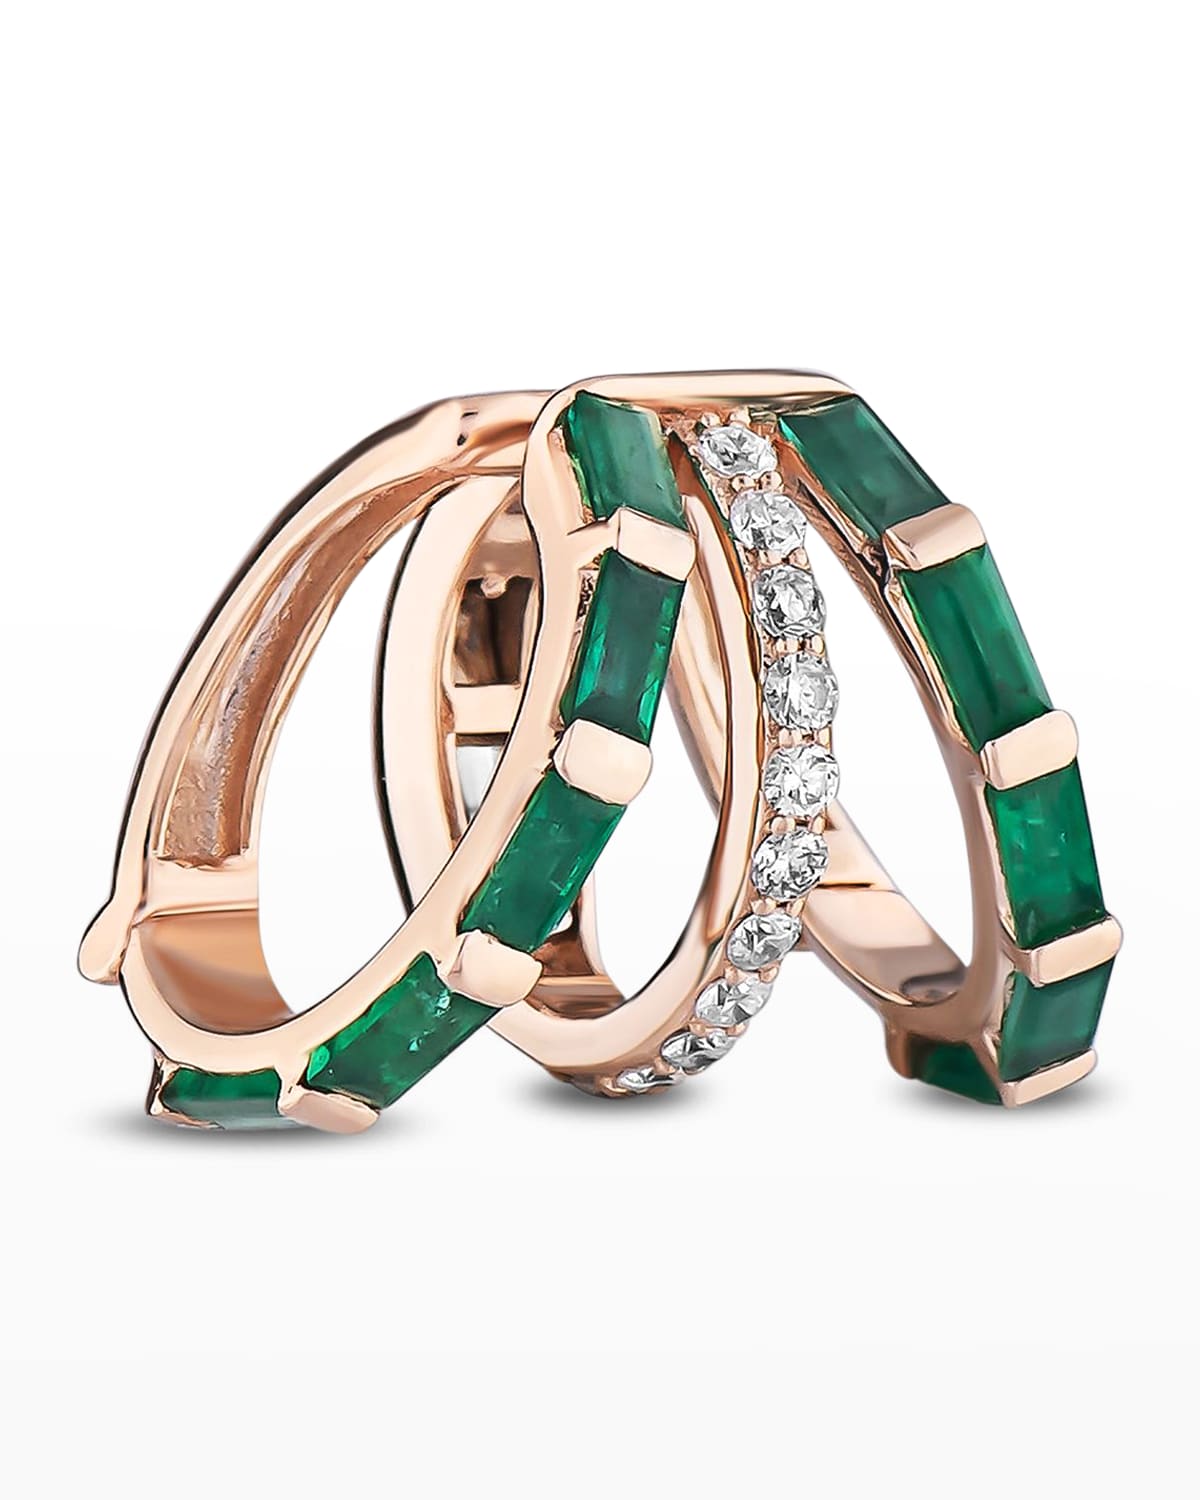 Mondrian Emerald Cuff Earring, Single